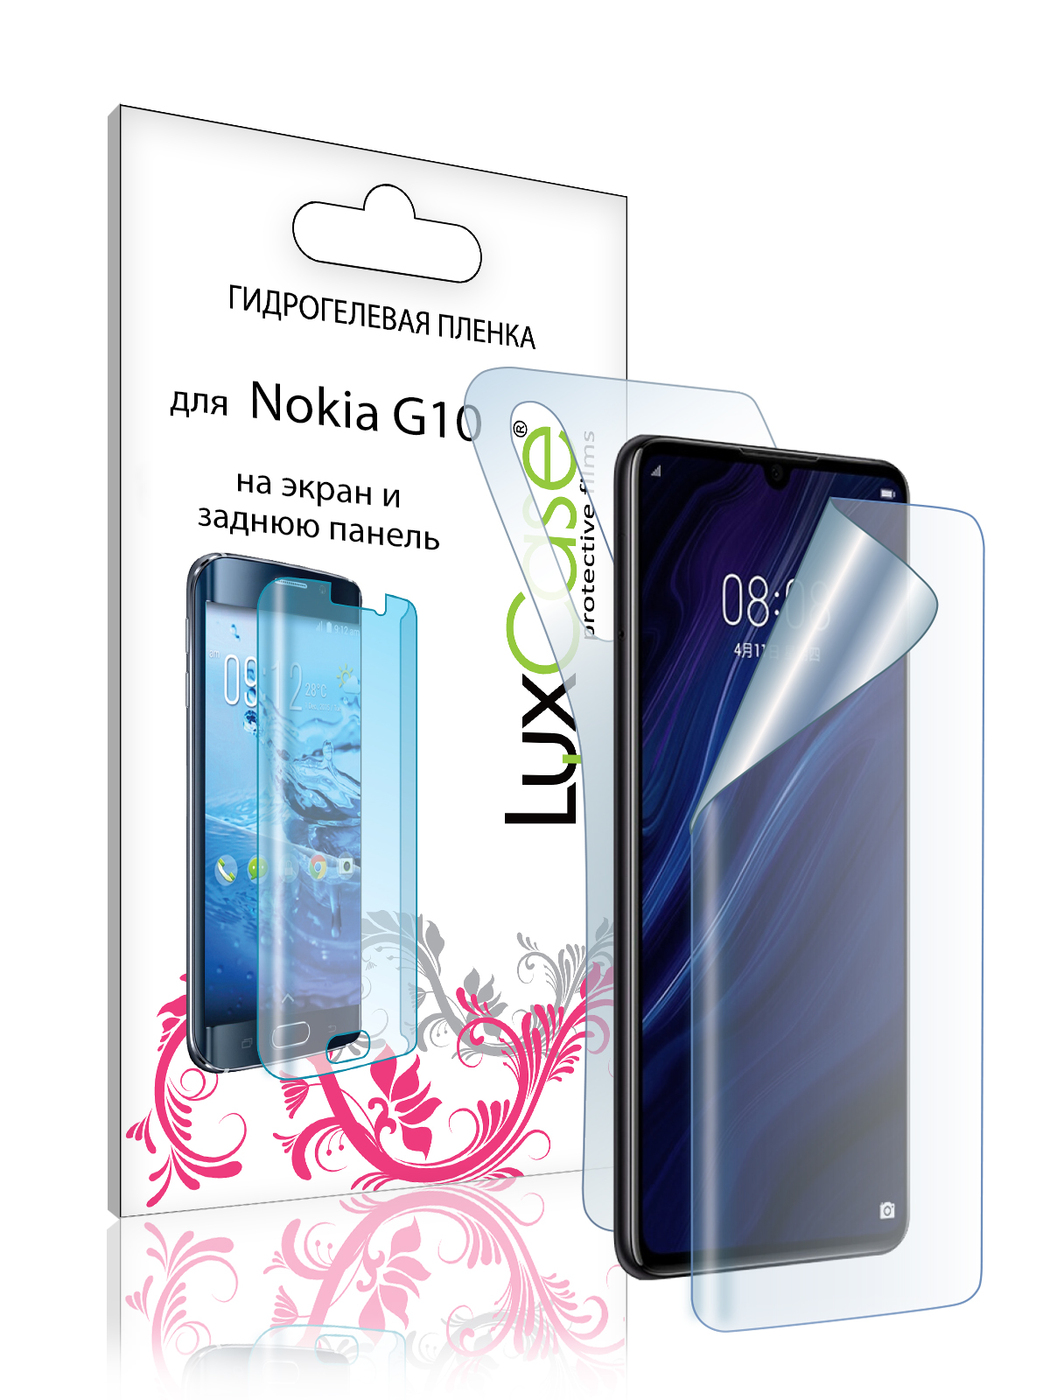 Пленка гидрогелевая LuxCase для Nokia G20 Front and Back Transparent 86394 пленка гидрогелевая luxcase для nokia g20 front and back transparent 86394